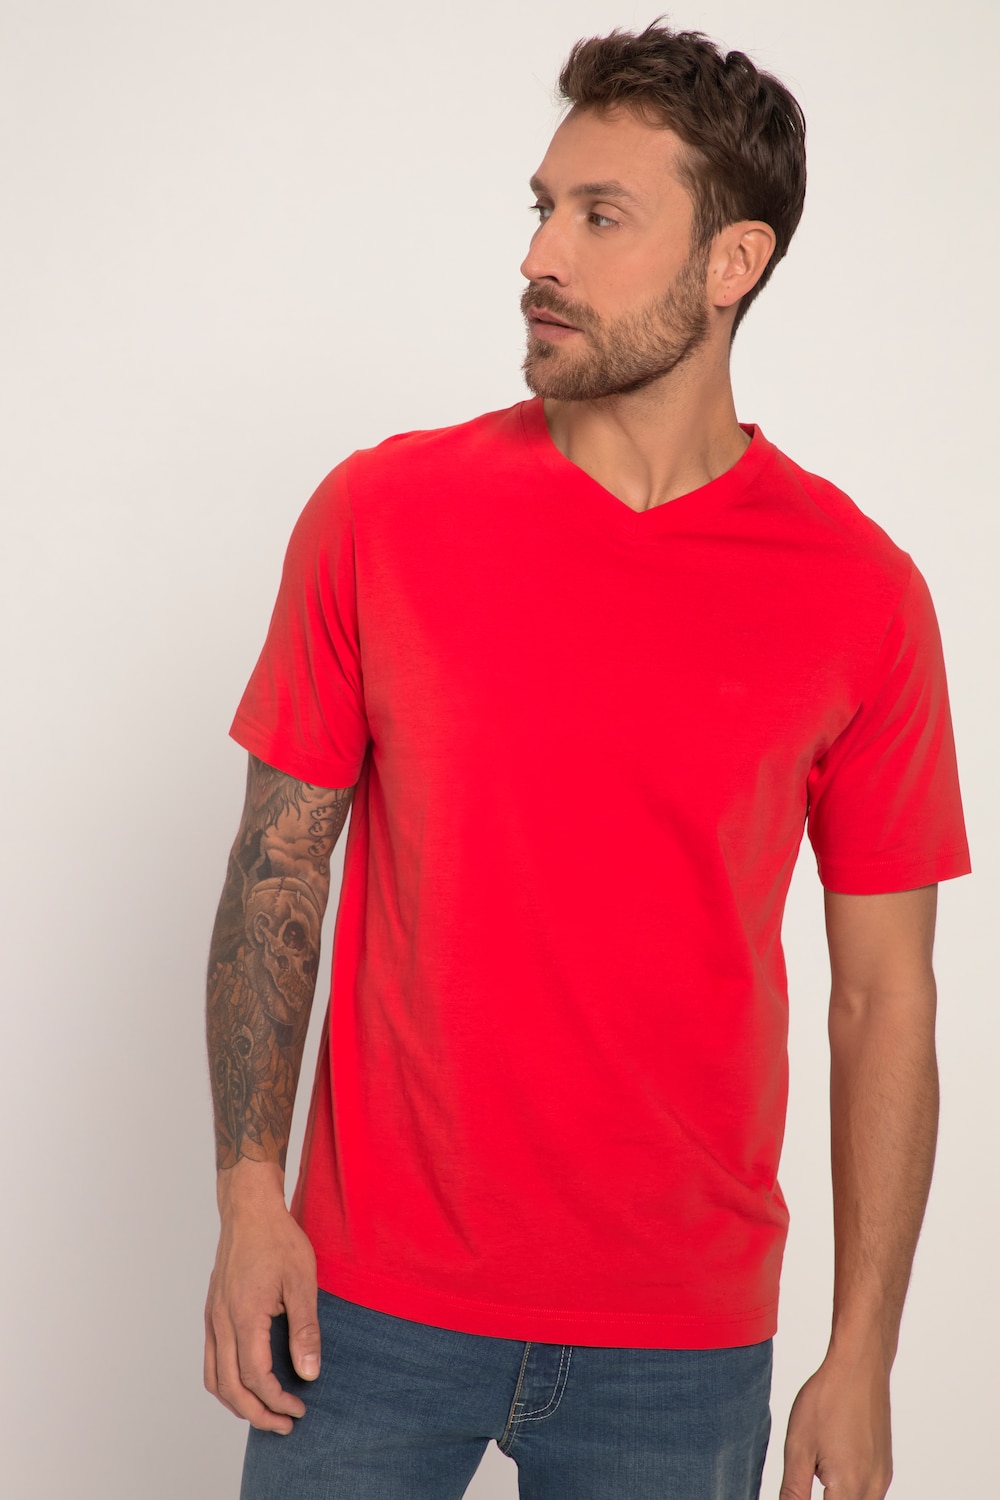 Grote Maten T-shirt, Heren, rood, Maat: L, Katoen/Polyester, JP1880